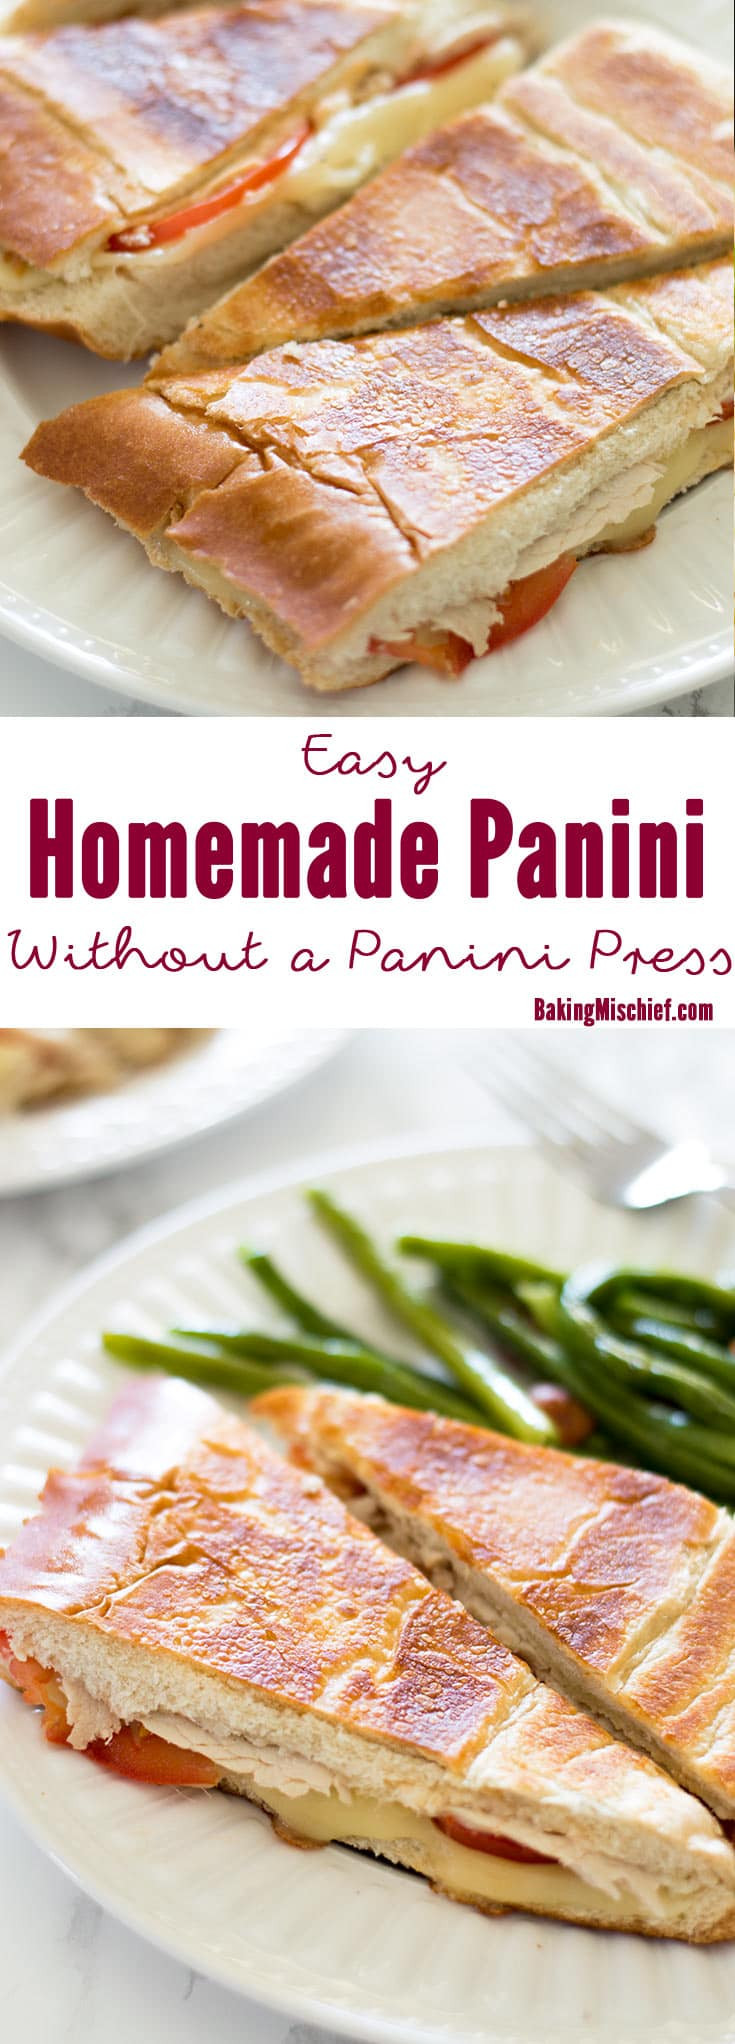 Panini Press Recipes
 Easy Homemade Panini Without a Panini Press